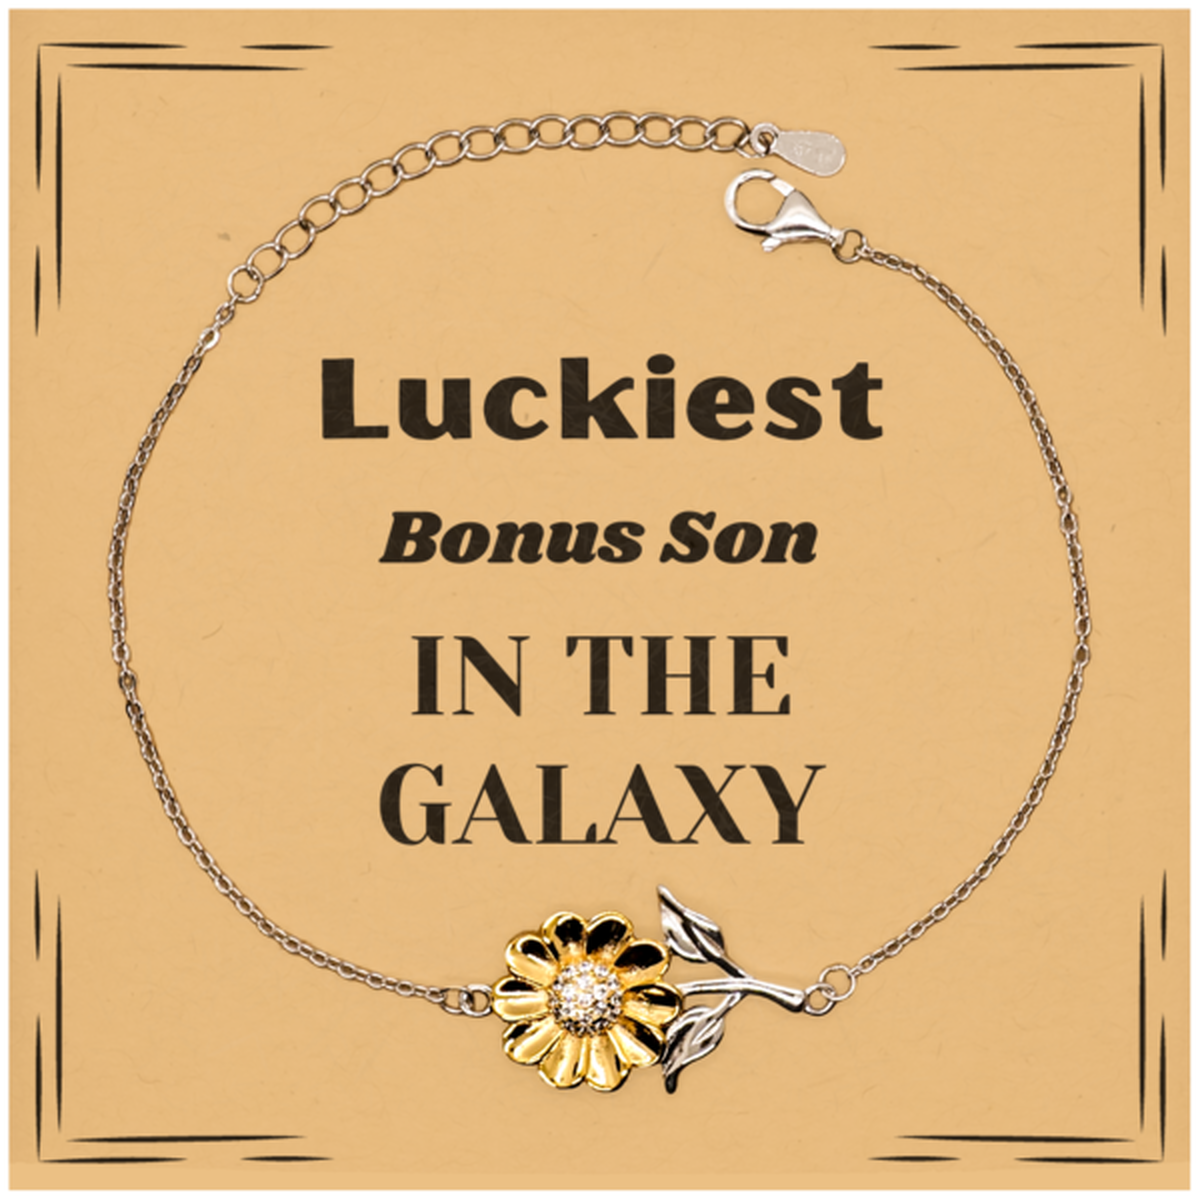 Luckiest Bonus Son in the Galaxy, To My Bonus Son Message Card Gifts, Christmas Bonus Son Sunflower Bracelet Gifts, X-mas Birthday Unique Gifts For Bonus Son Men Women